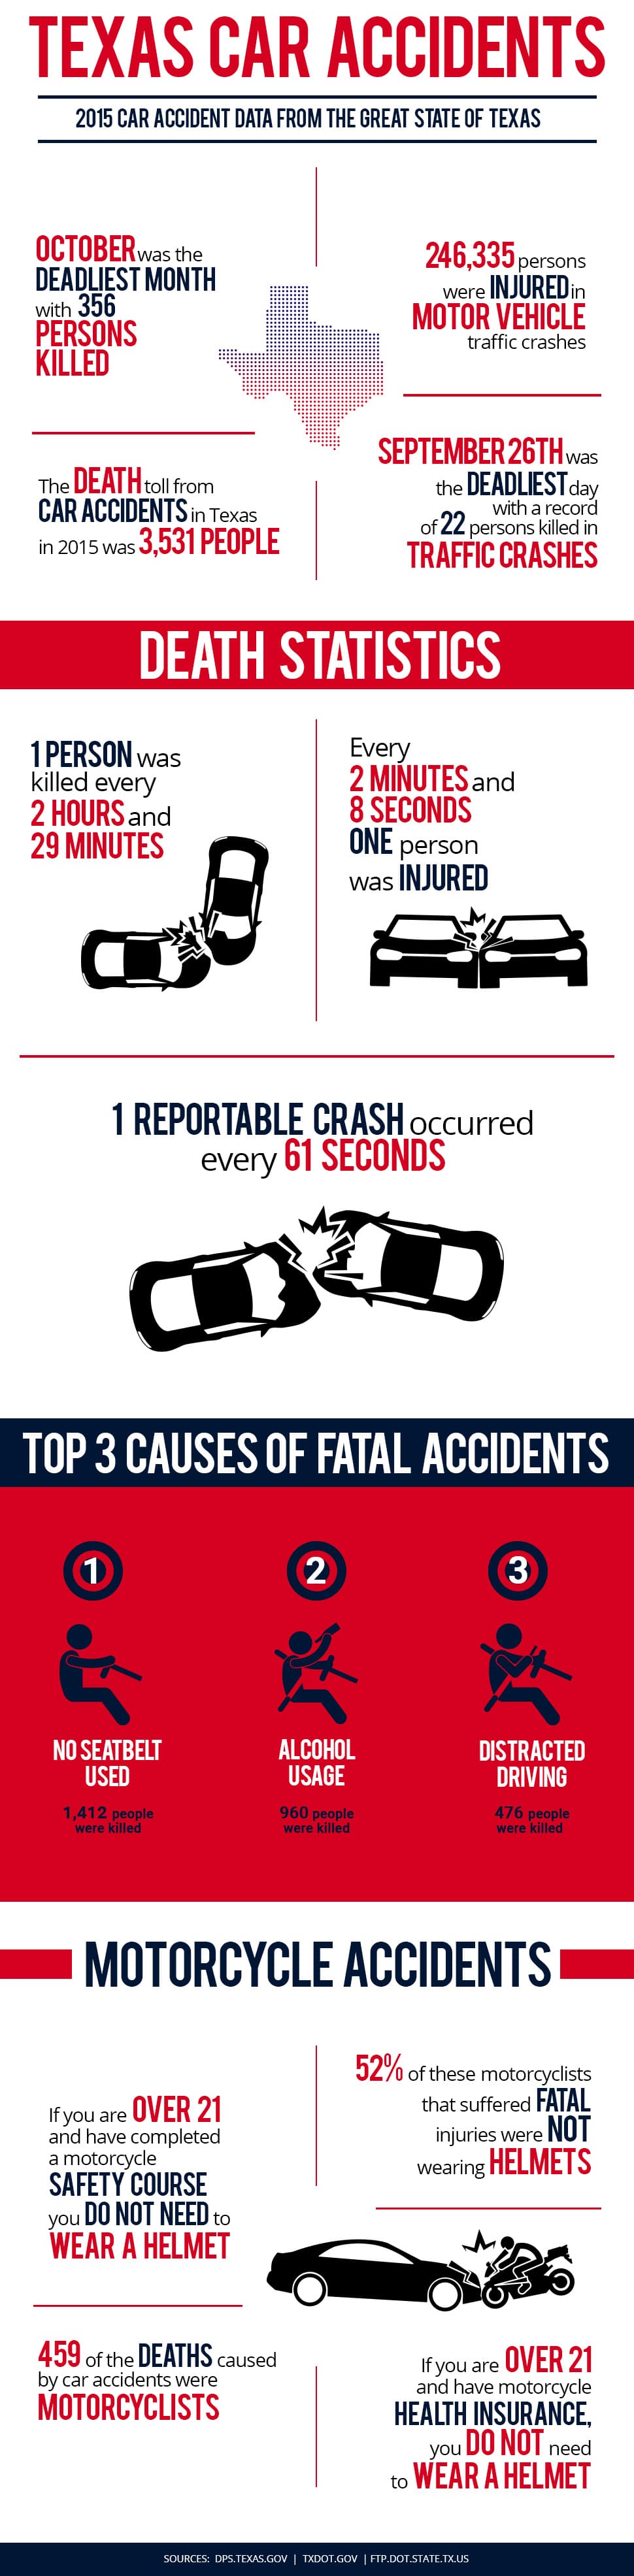 Texas Car Accident Statistics Infographic